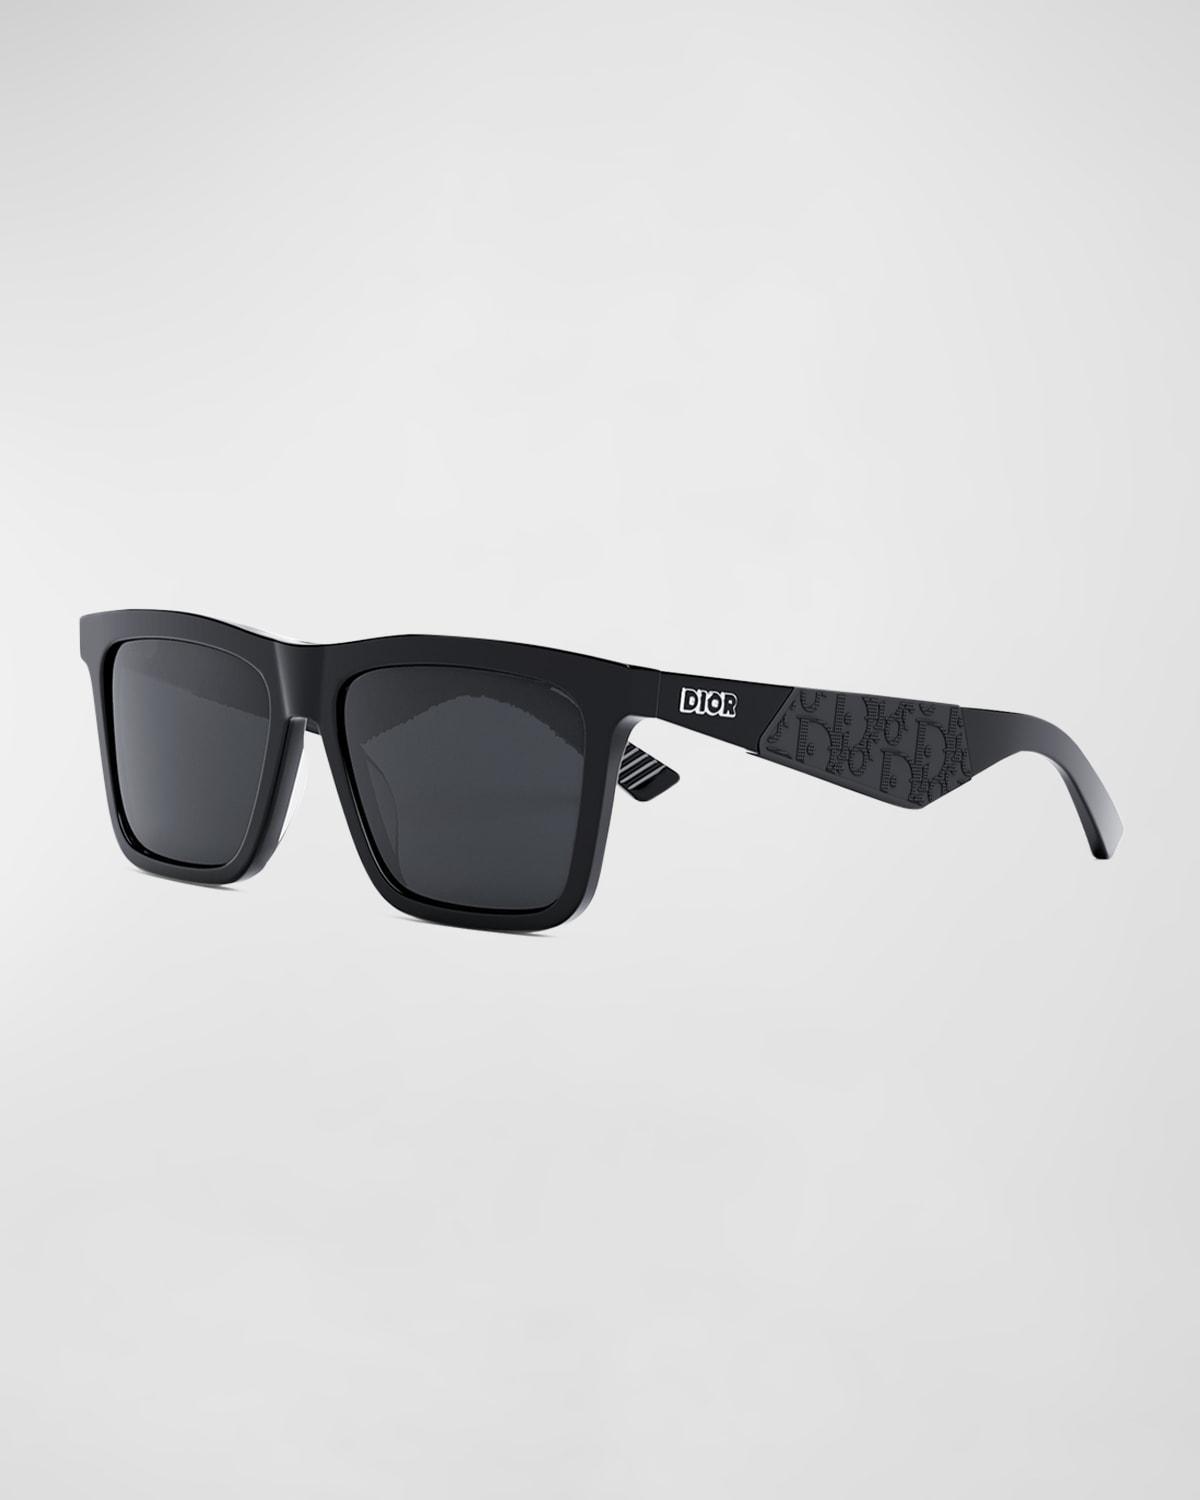 DiorB27 S1I 56mm Rectangular Sunglasses Product Image